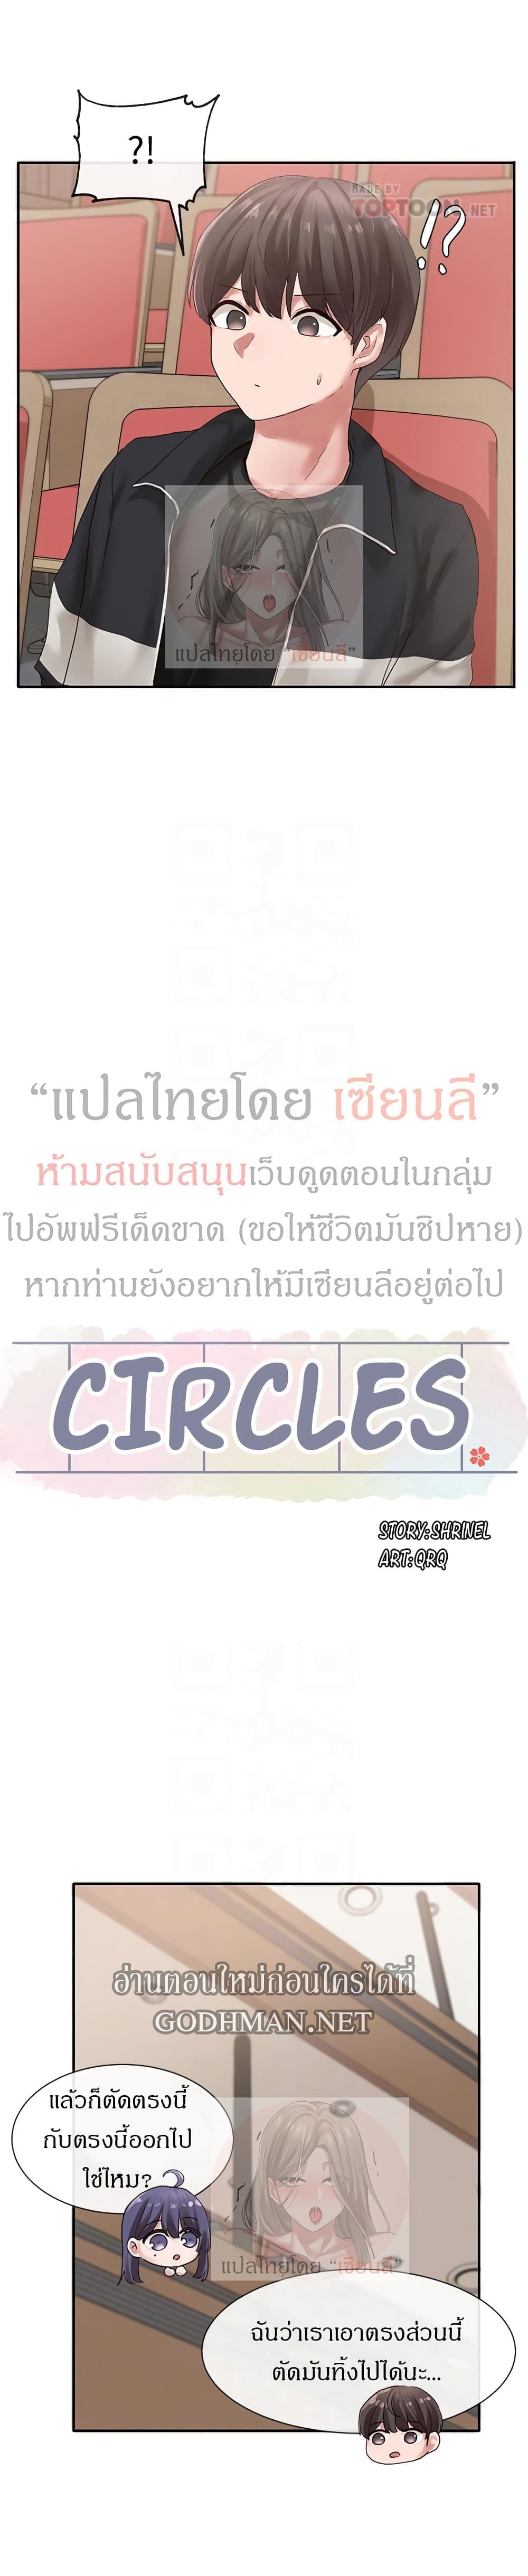 Theater Society (Circles) 37-37